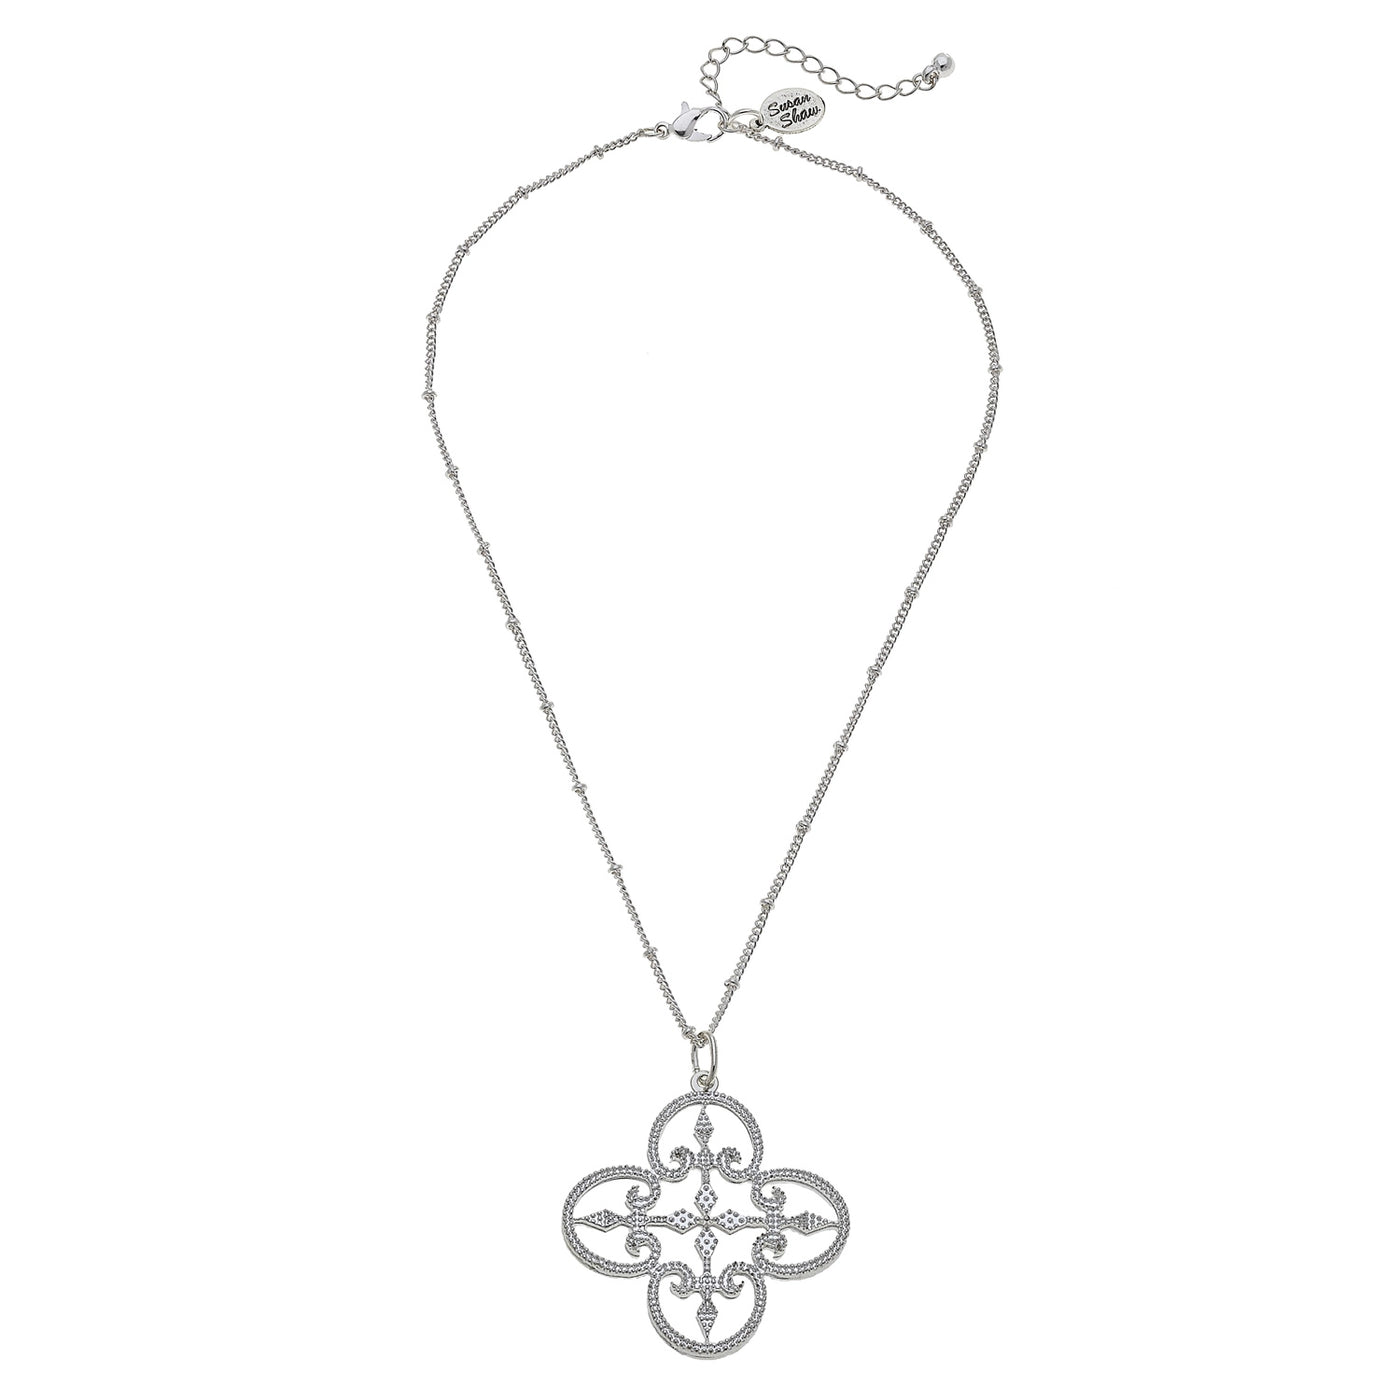 Silver filigree cross on a simple silver chain